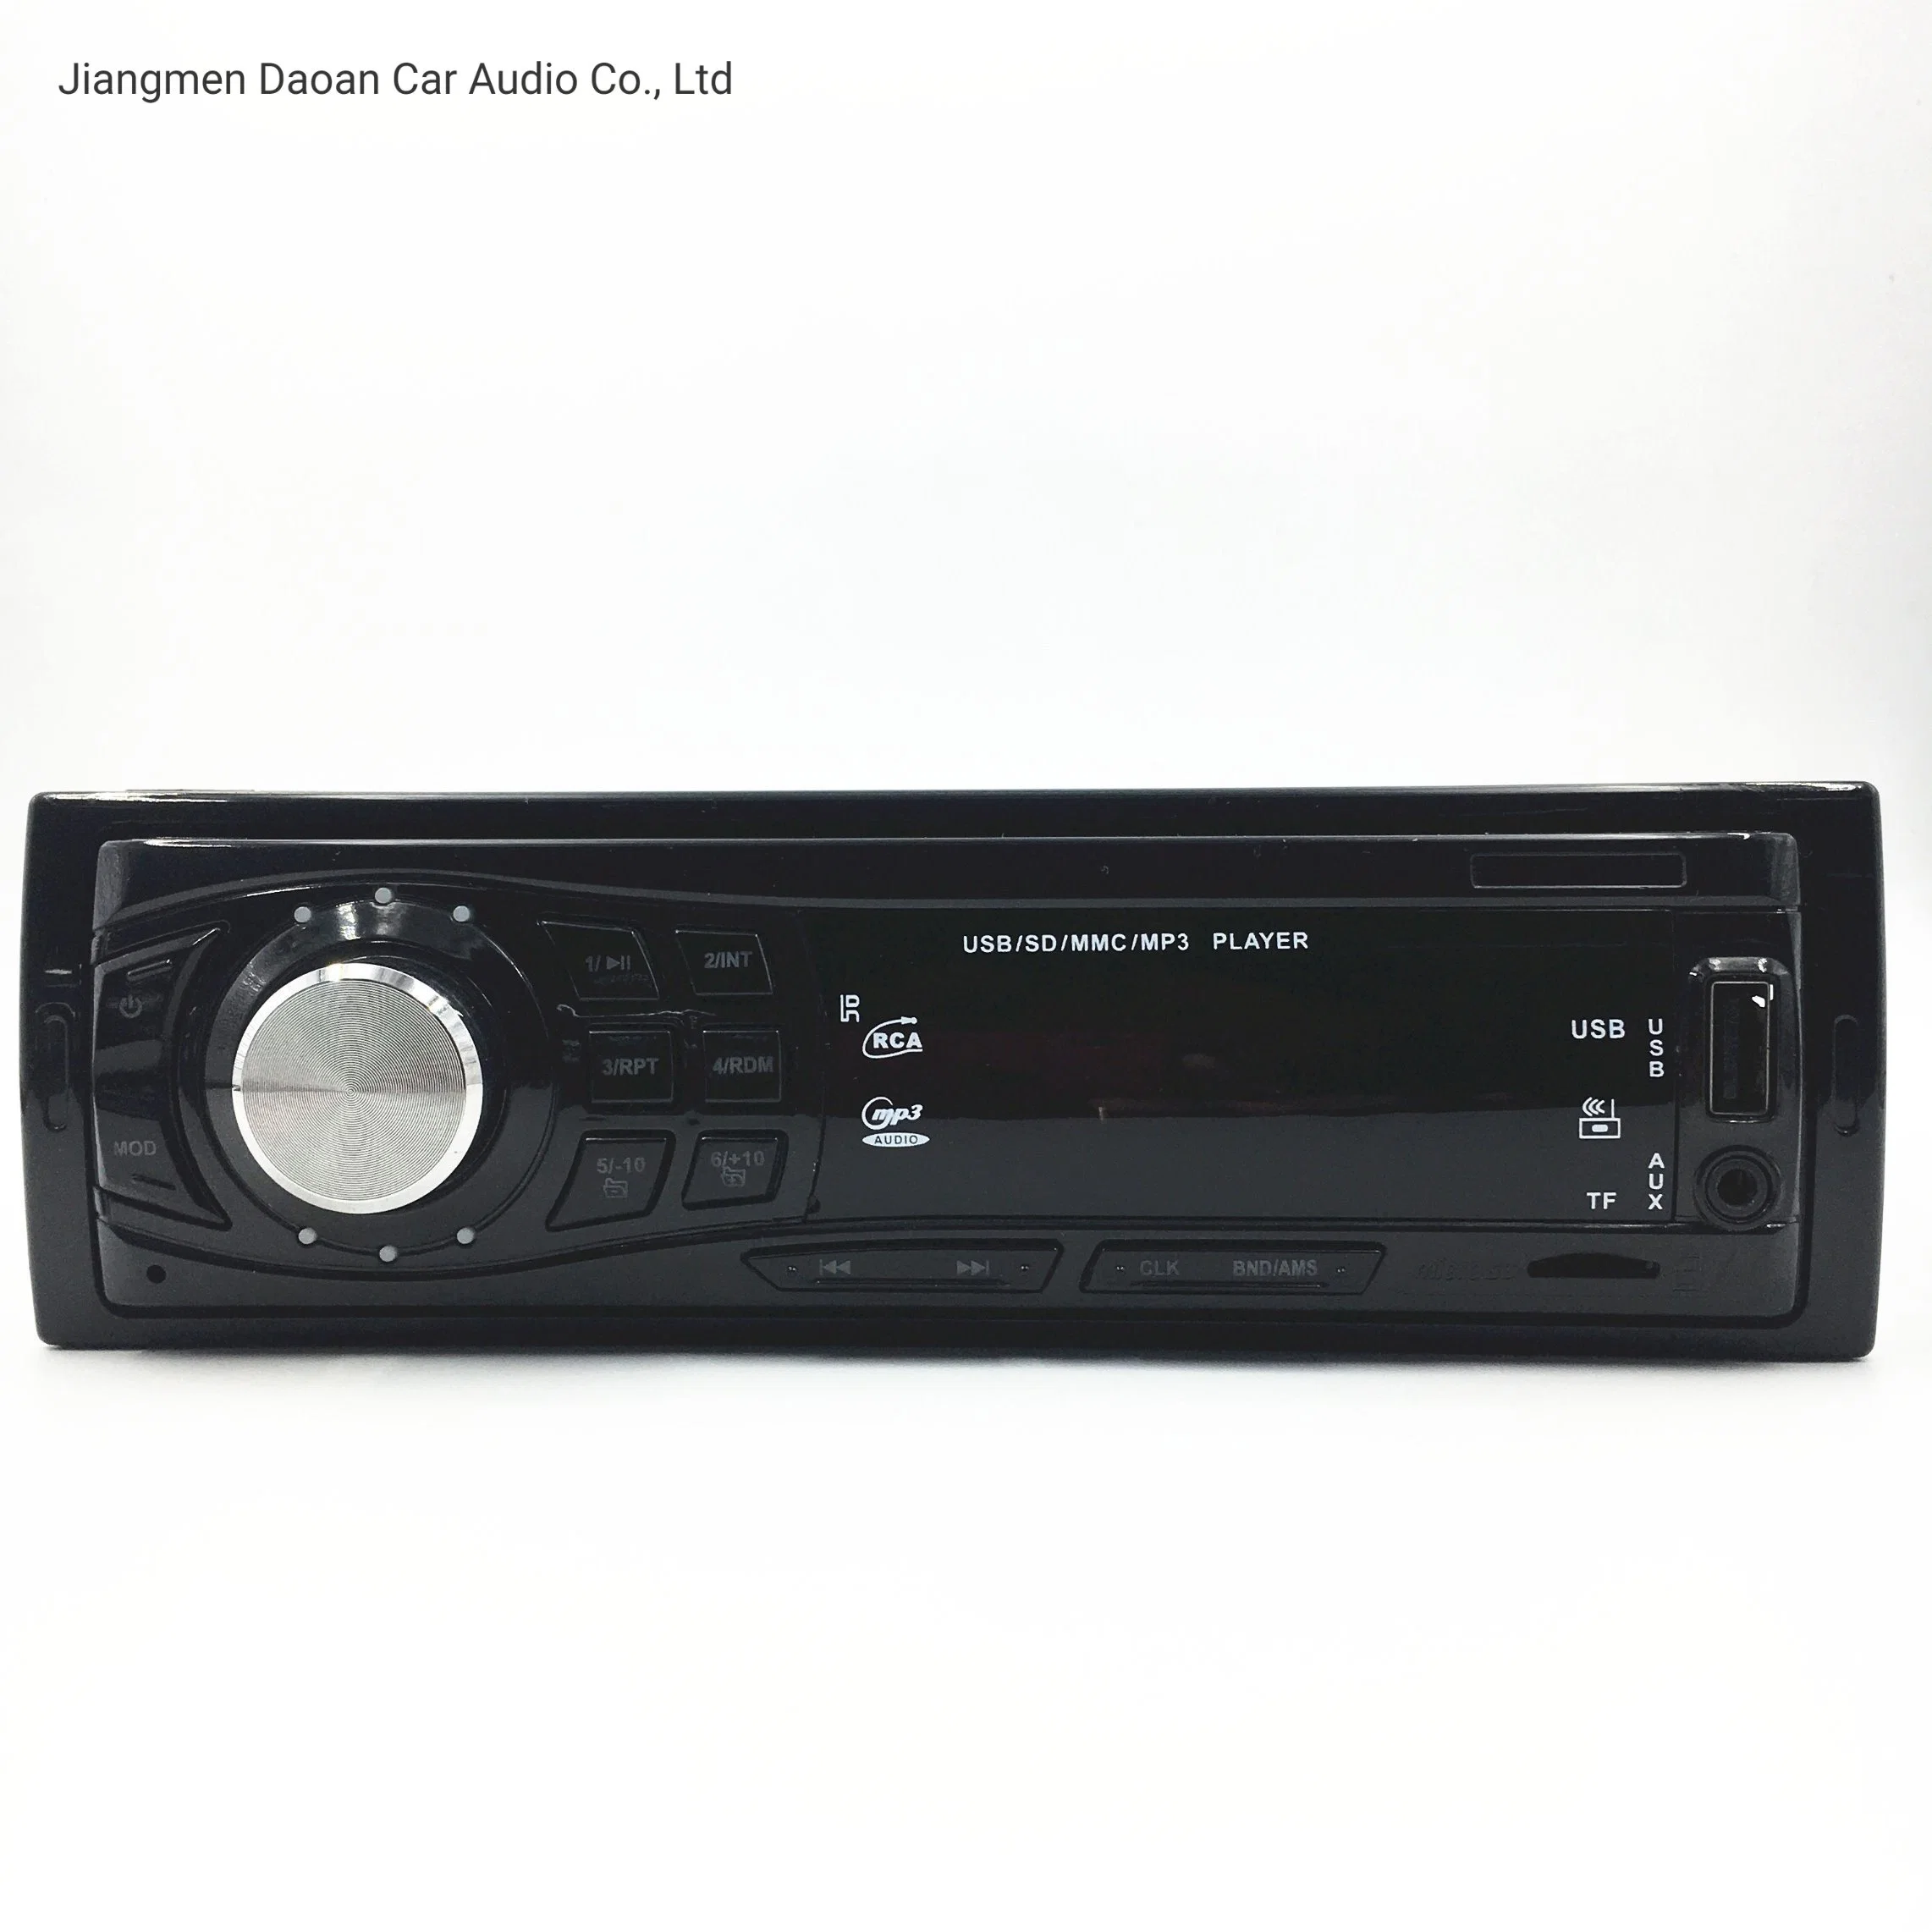 Single DIN Car Consumer Electronics MP3 Audio Head Unit